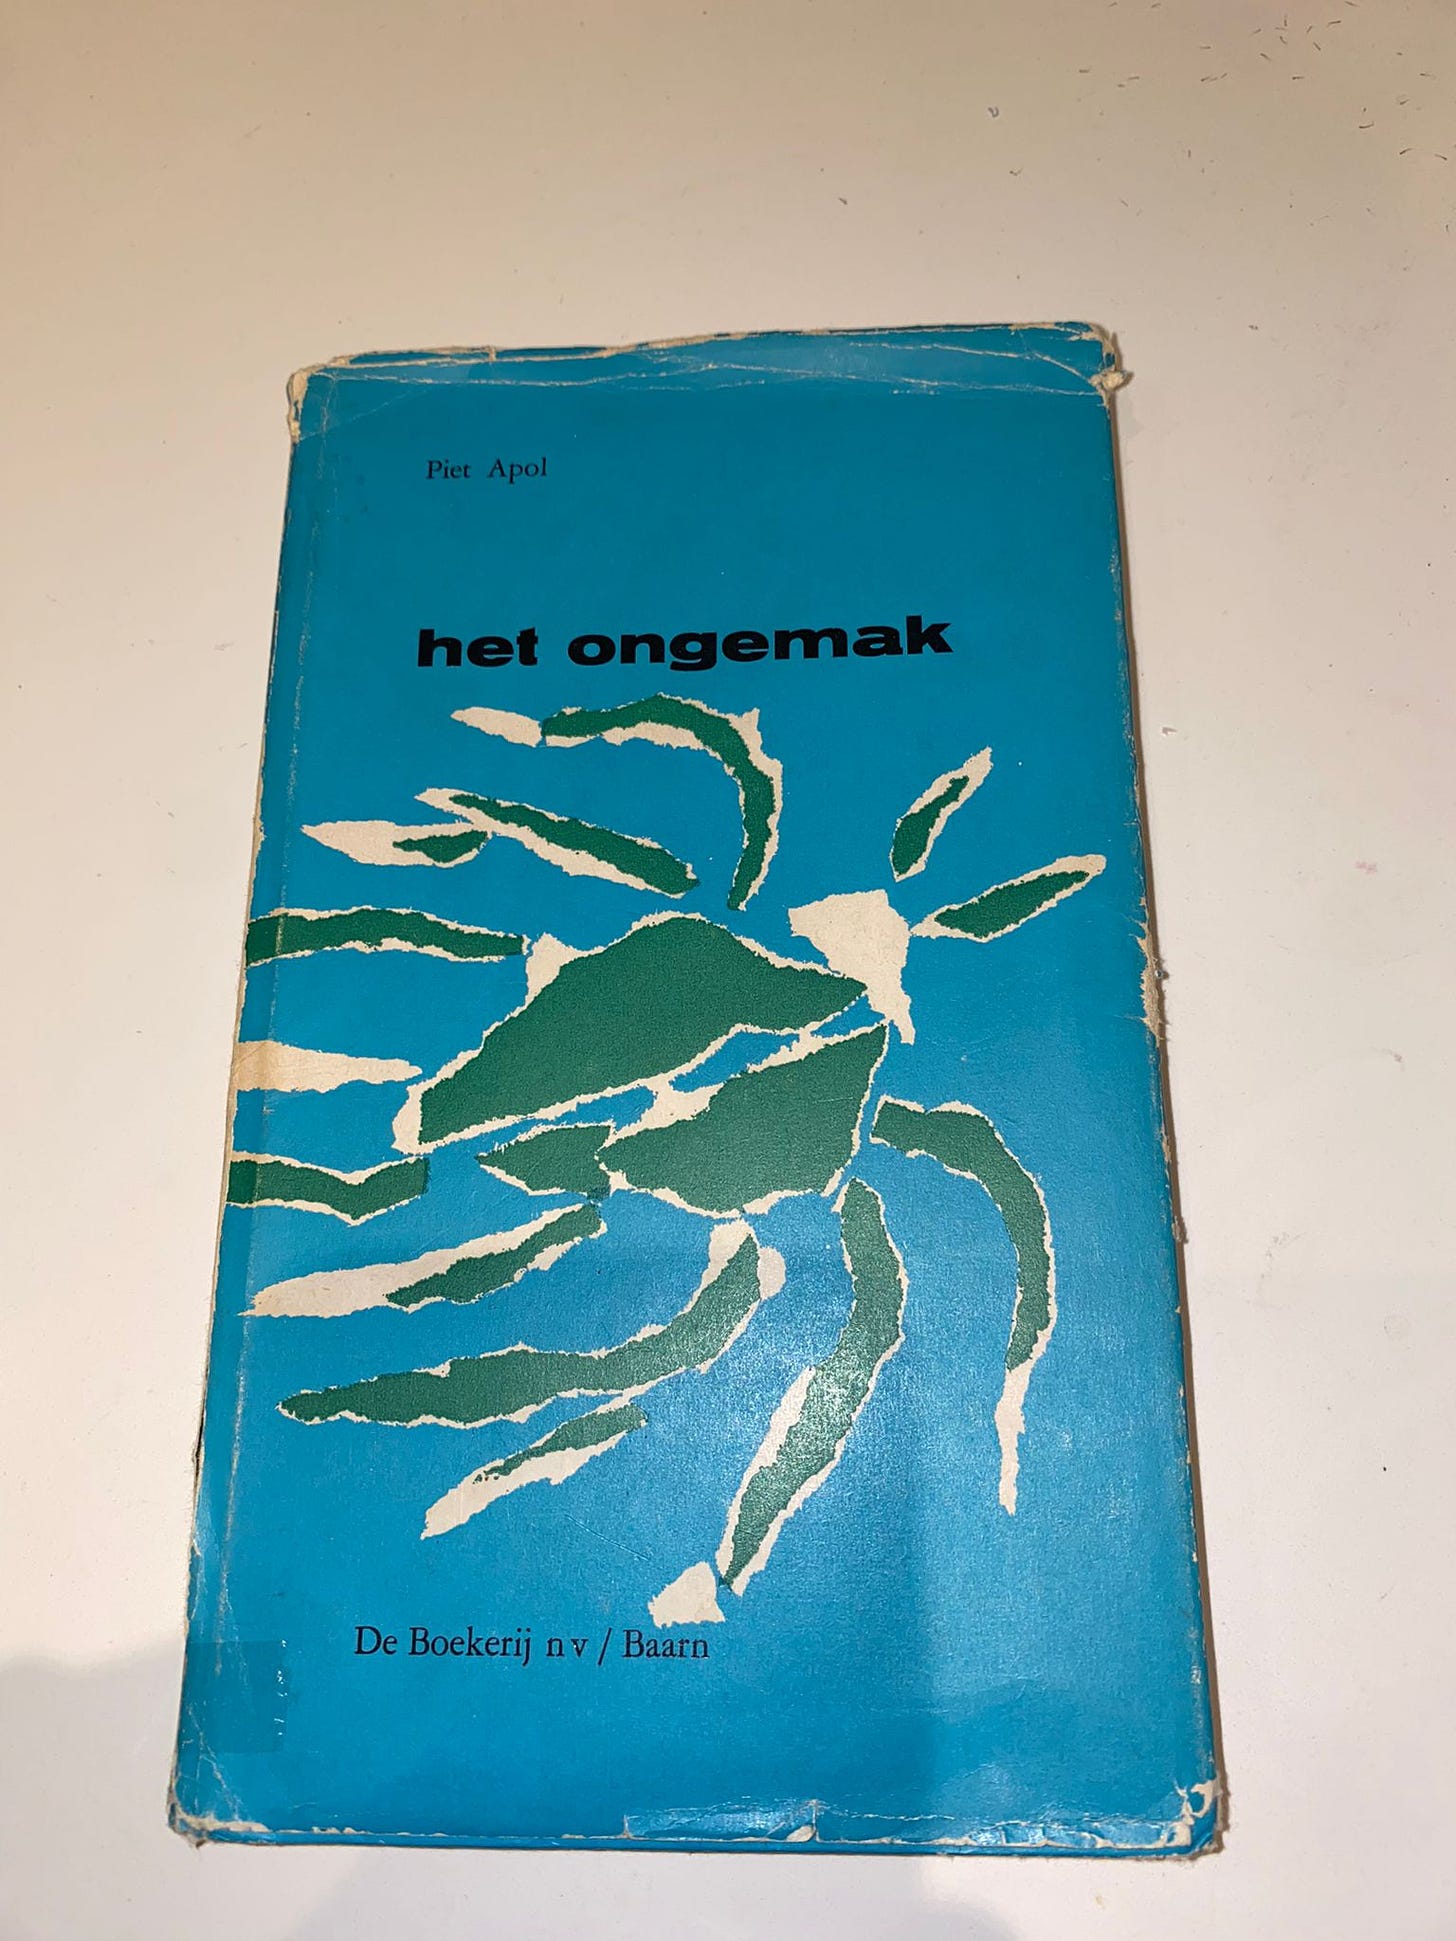 An old book: Het Ongemak by Piet Apol